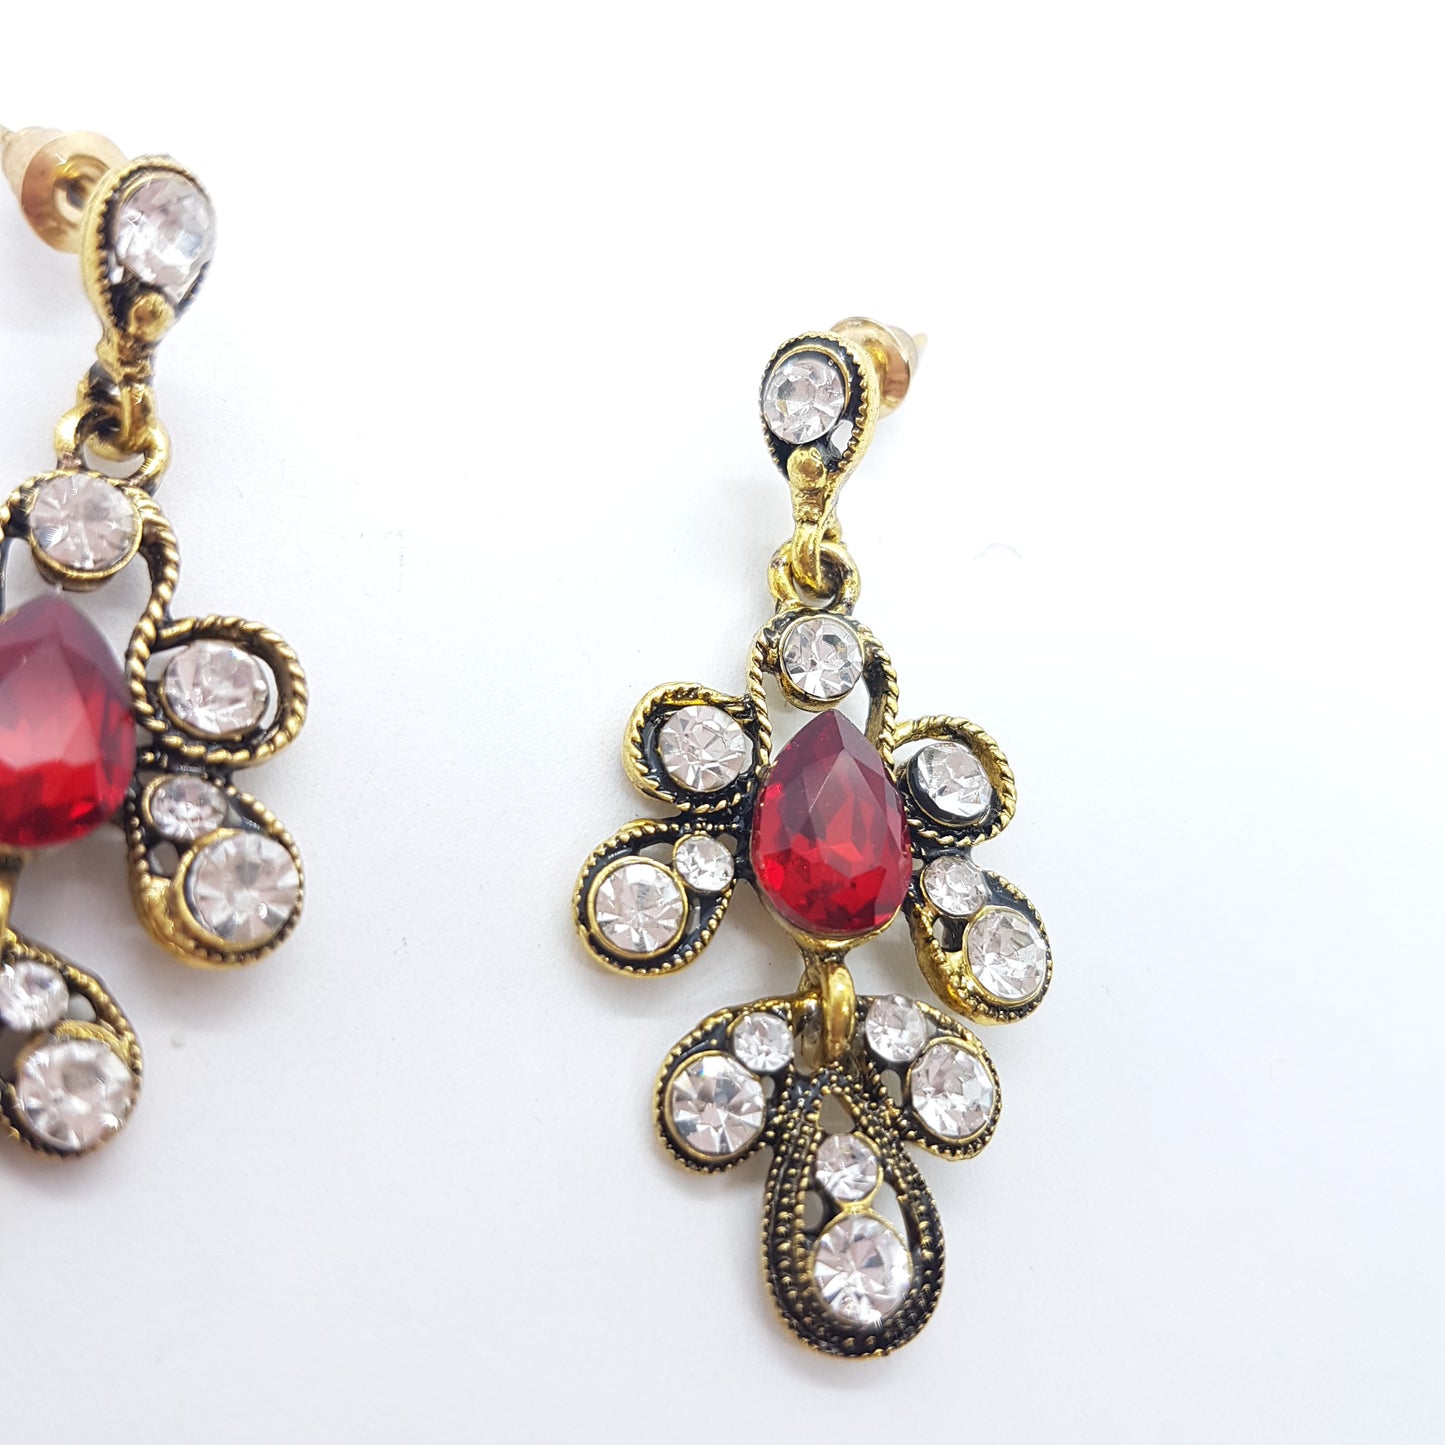 Antique Style Red Rhinestone Earrings